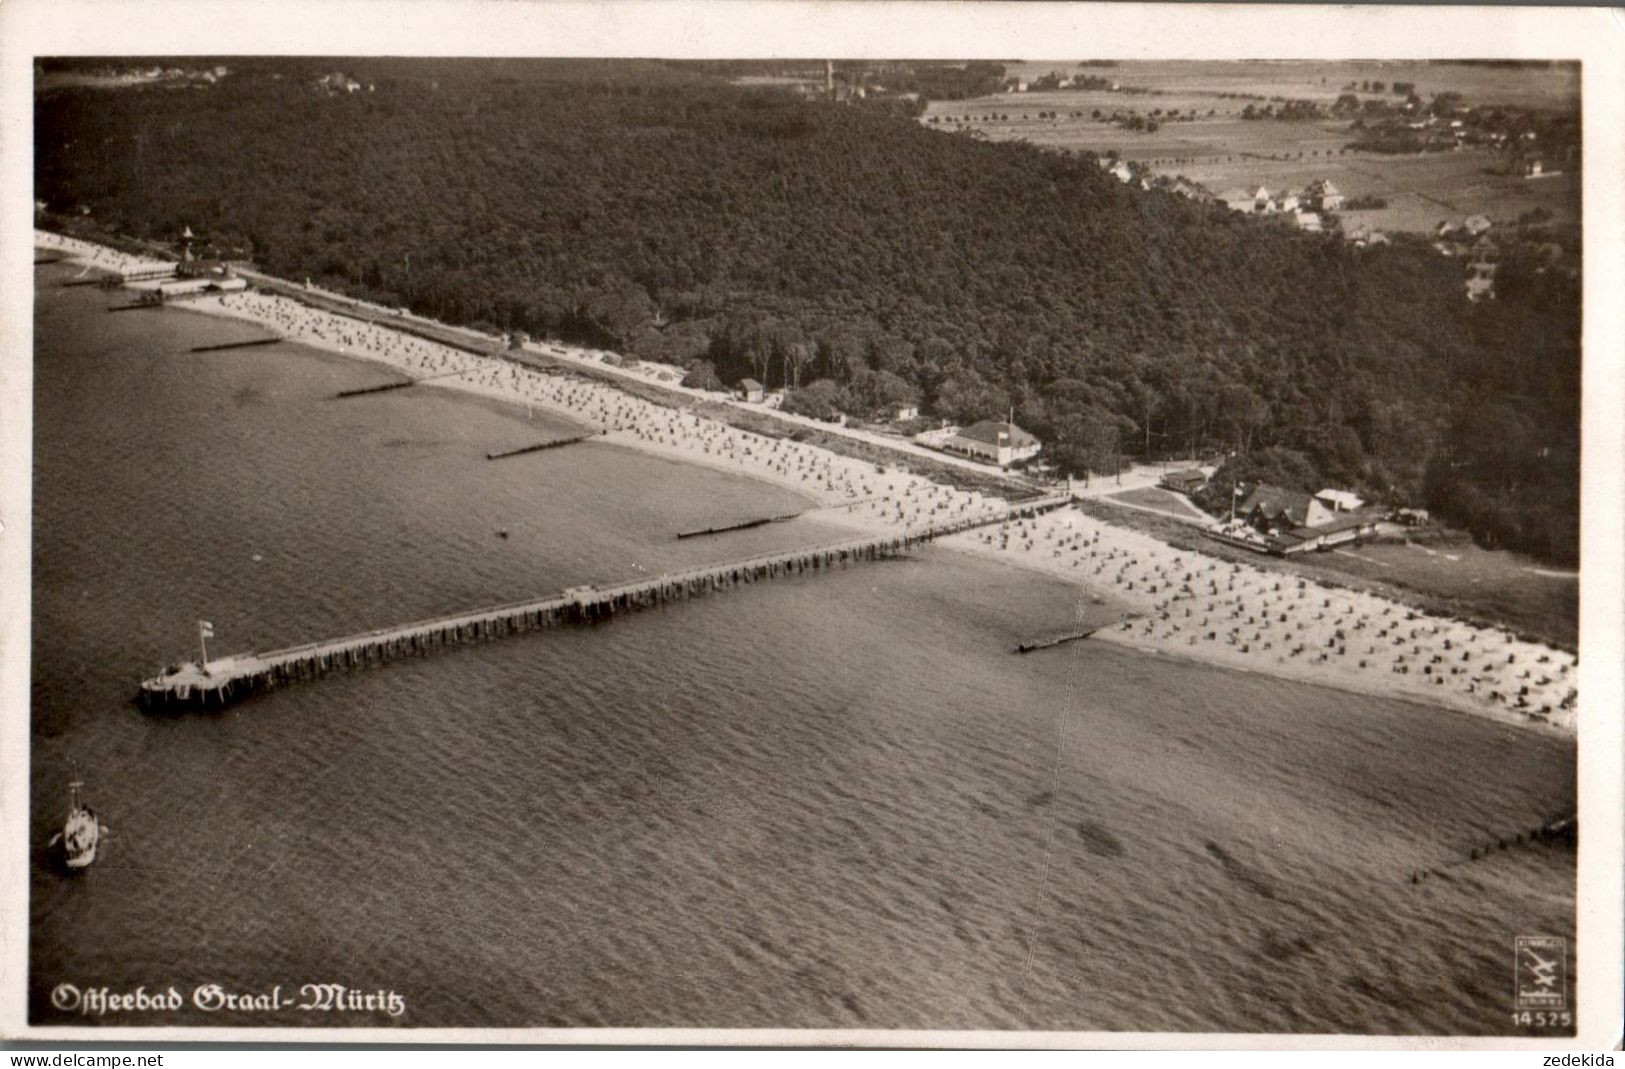 E8783 - Graal Müritz - Seebrücke Luftbild Luftaufnahme - Fliegeraufnahme RLM Klinke & Co - Graal-Müritz